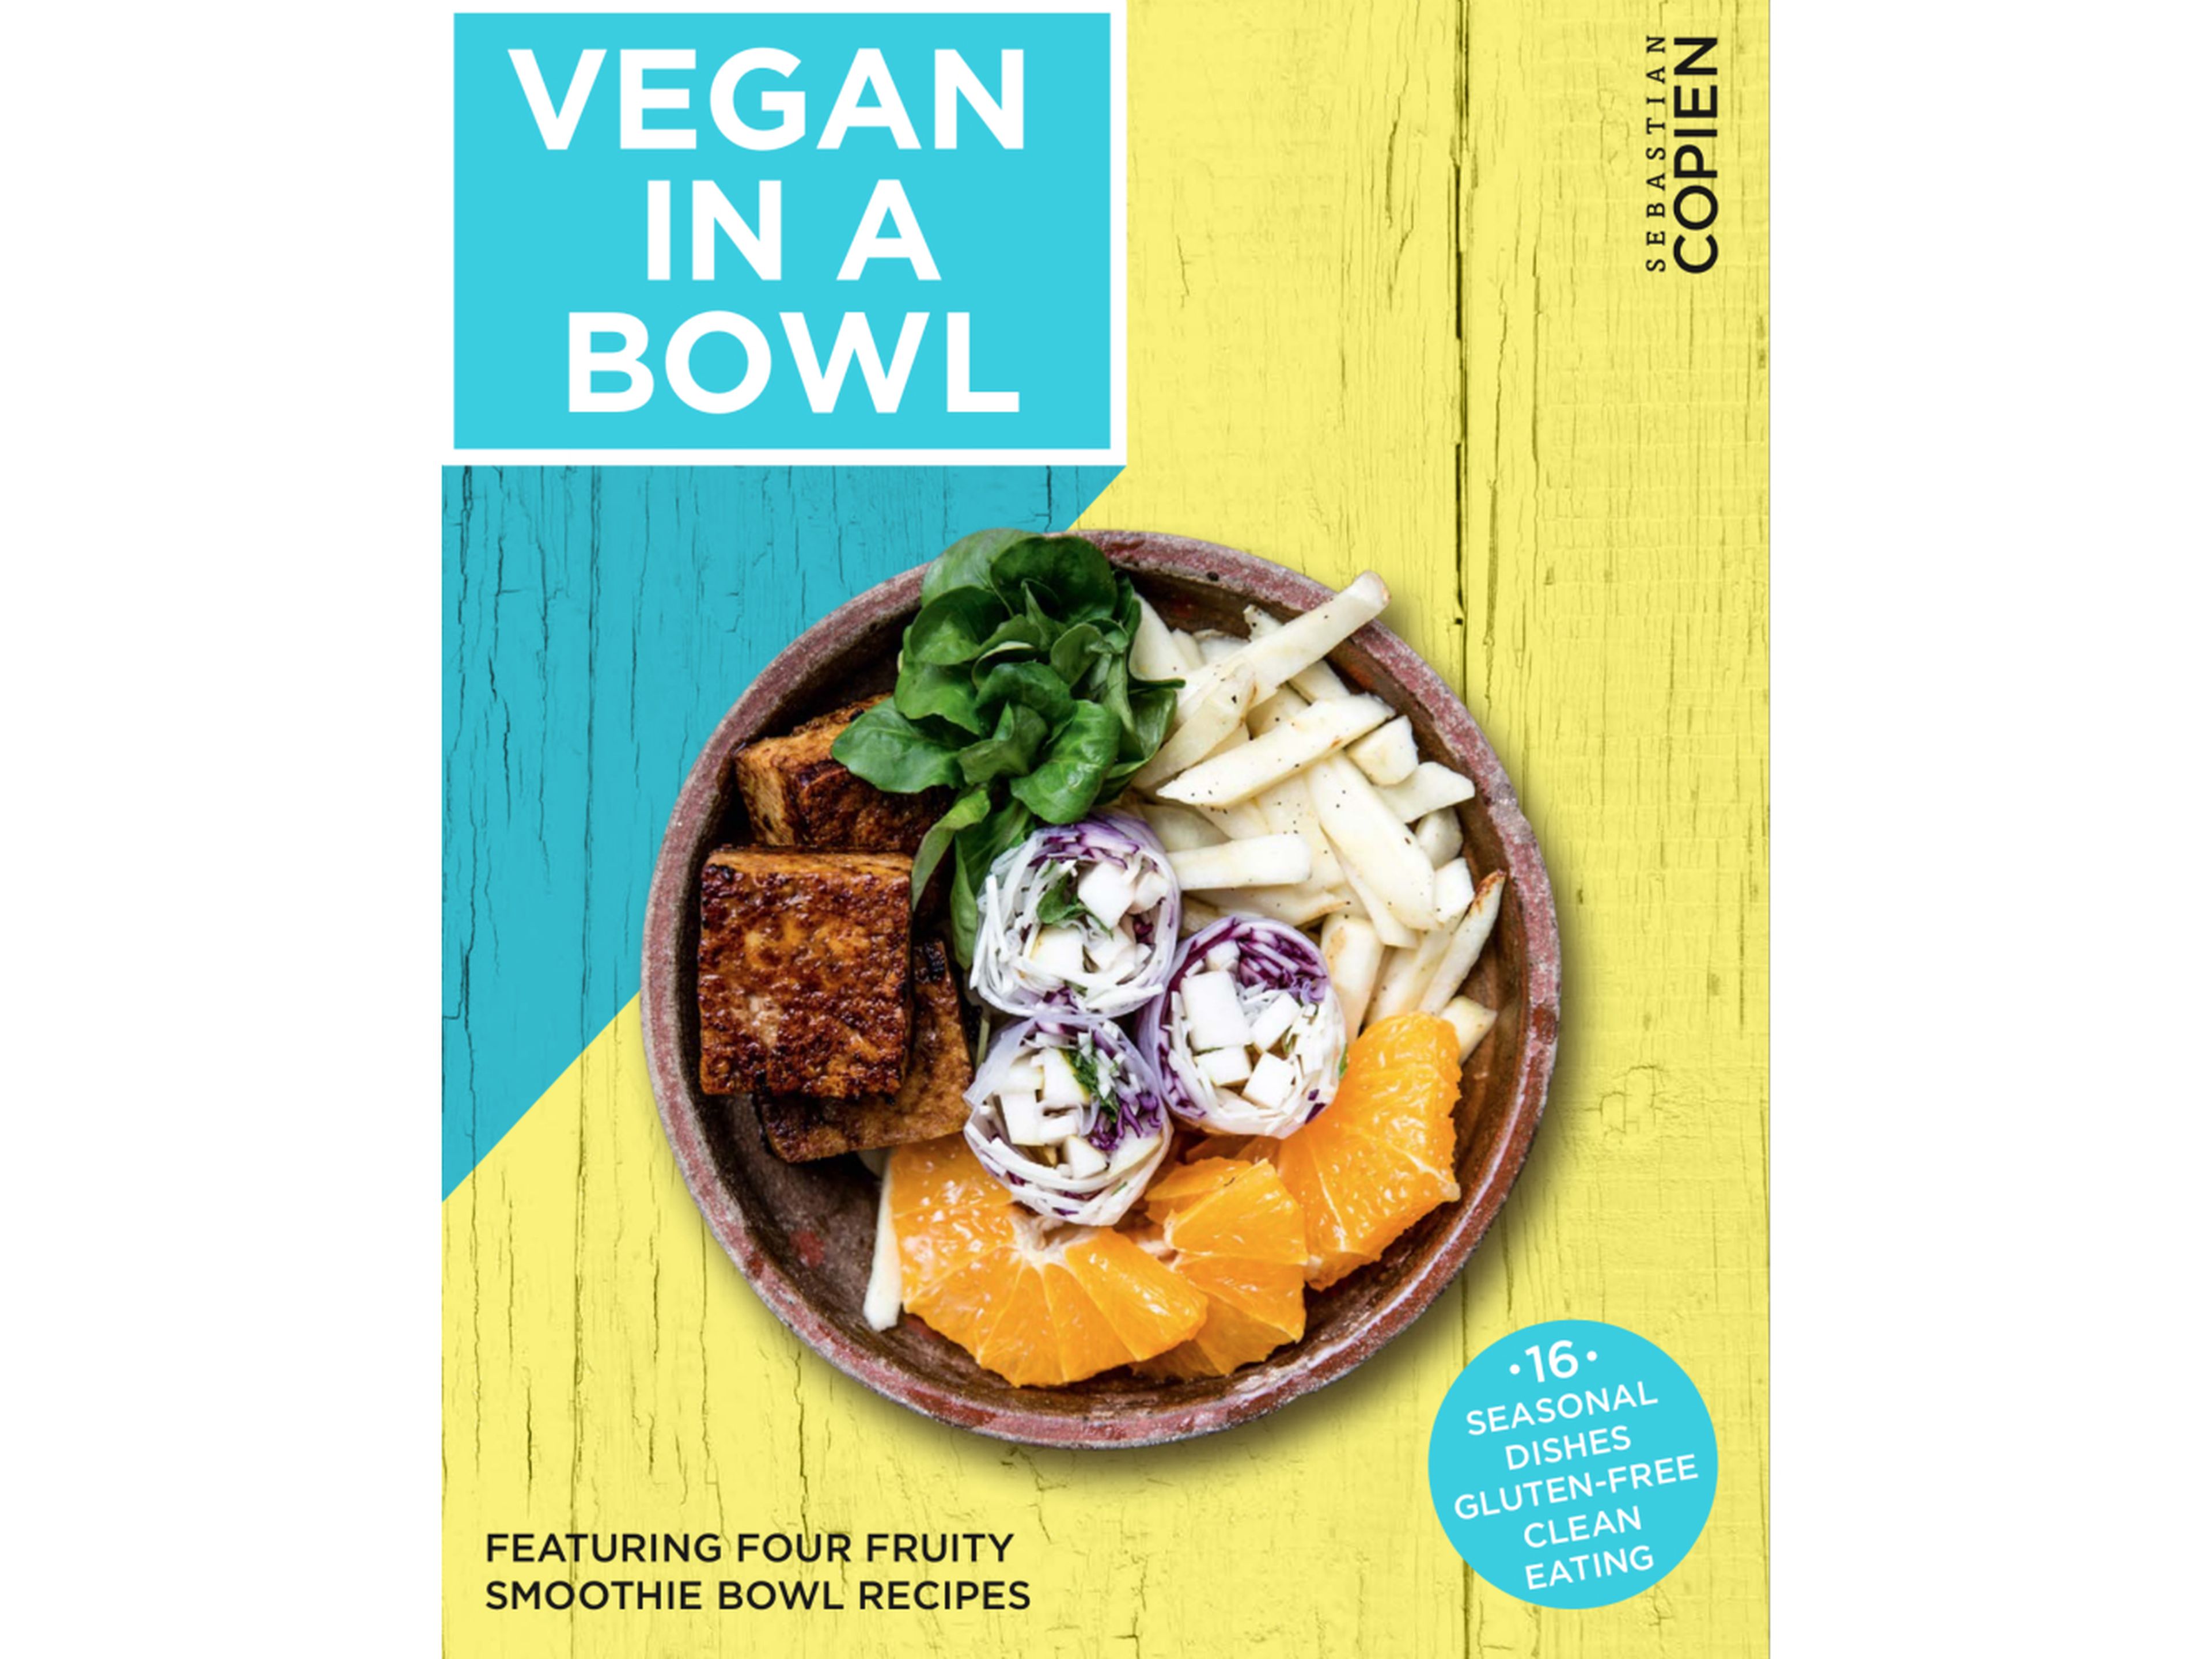 Find more recipes in my free Ebook www.vegan-bowl.de!